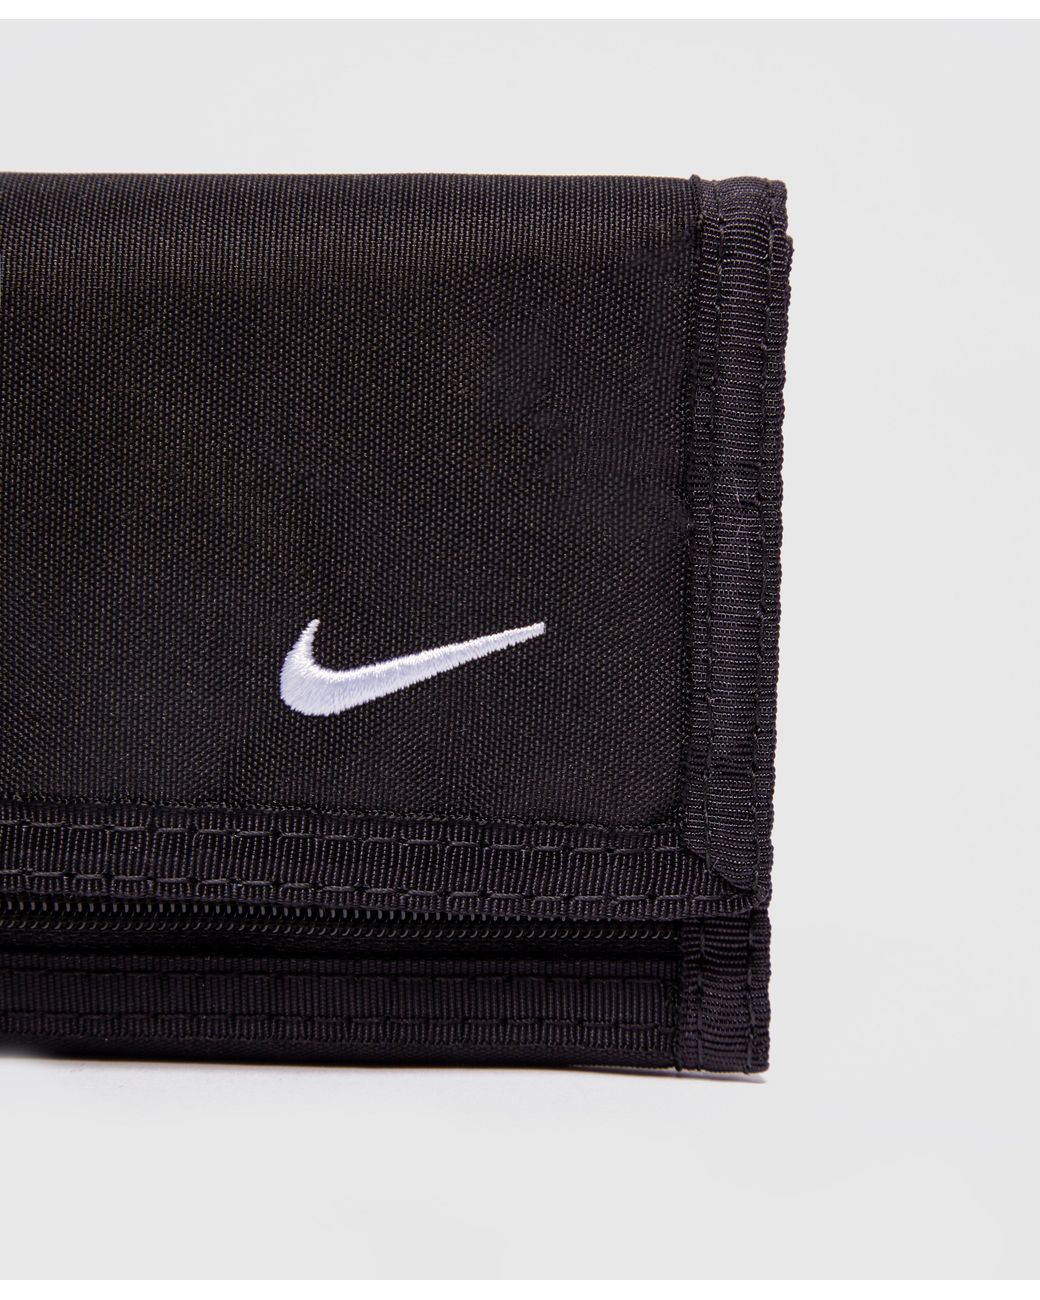 Nike Basic Wallet in Black for Men | Lyst